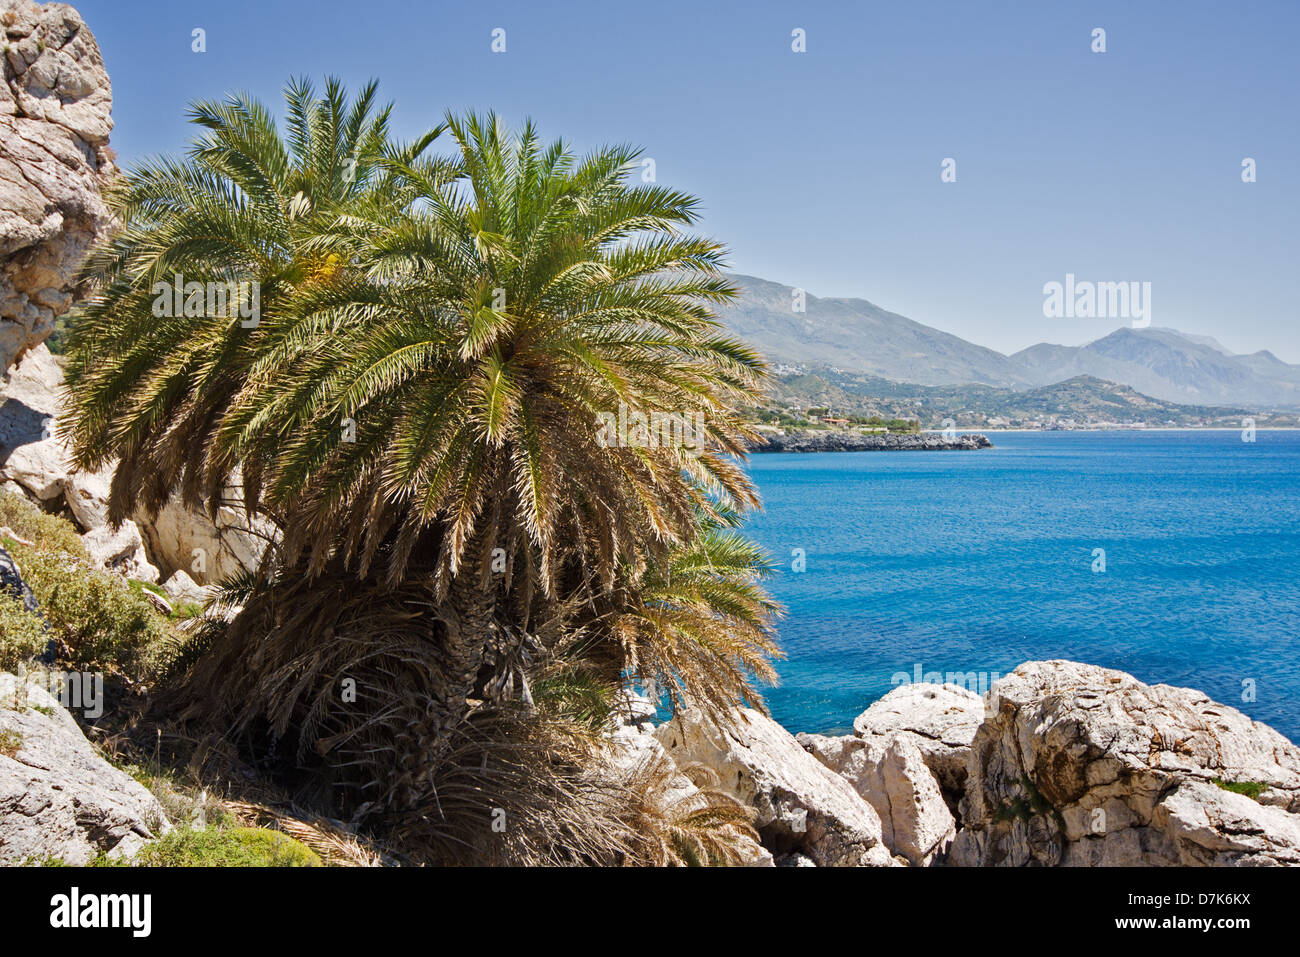 Fecha de Creta Palm en la costa de Creta, cerca del azul mar de Libia Foto de stock